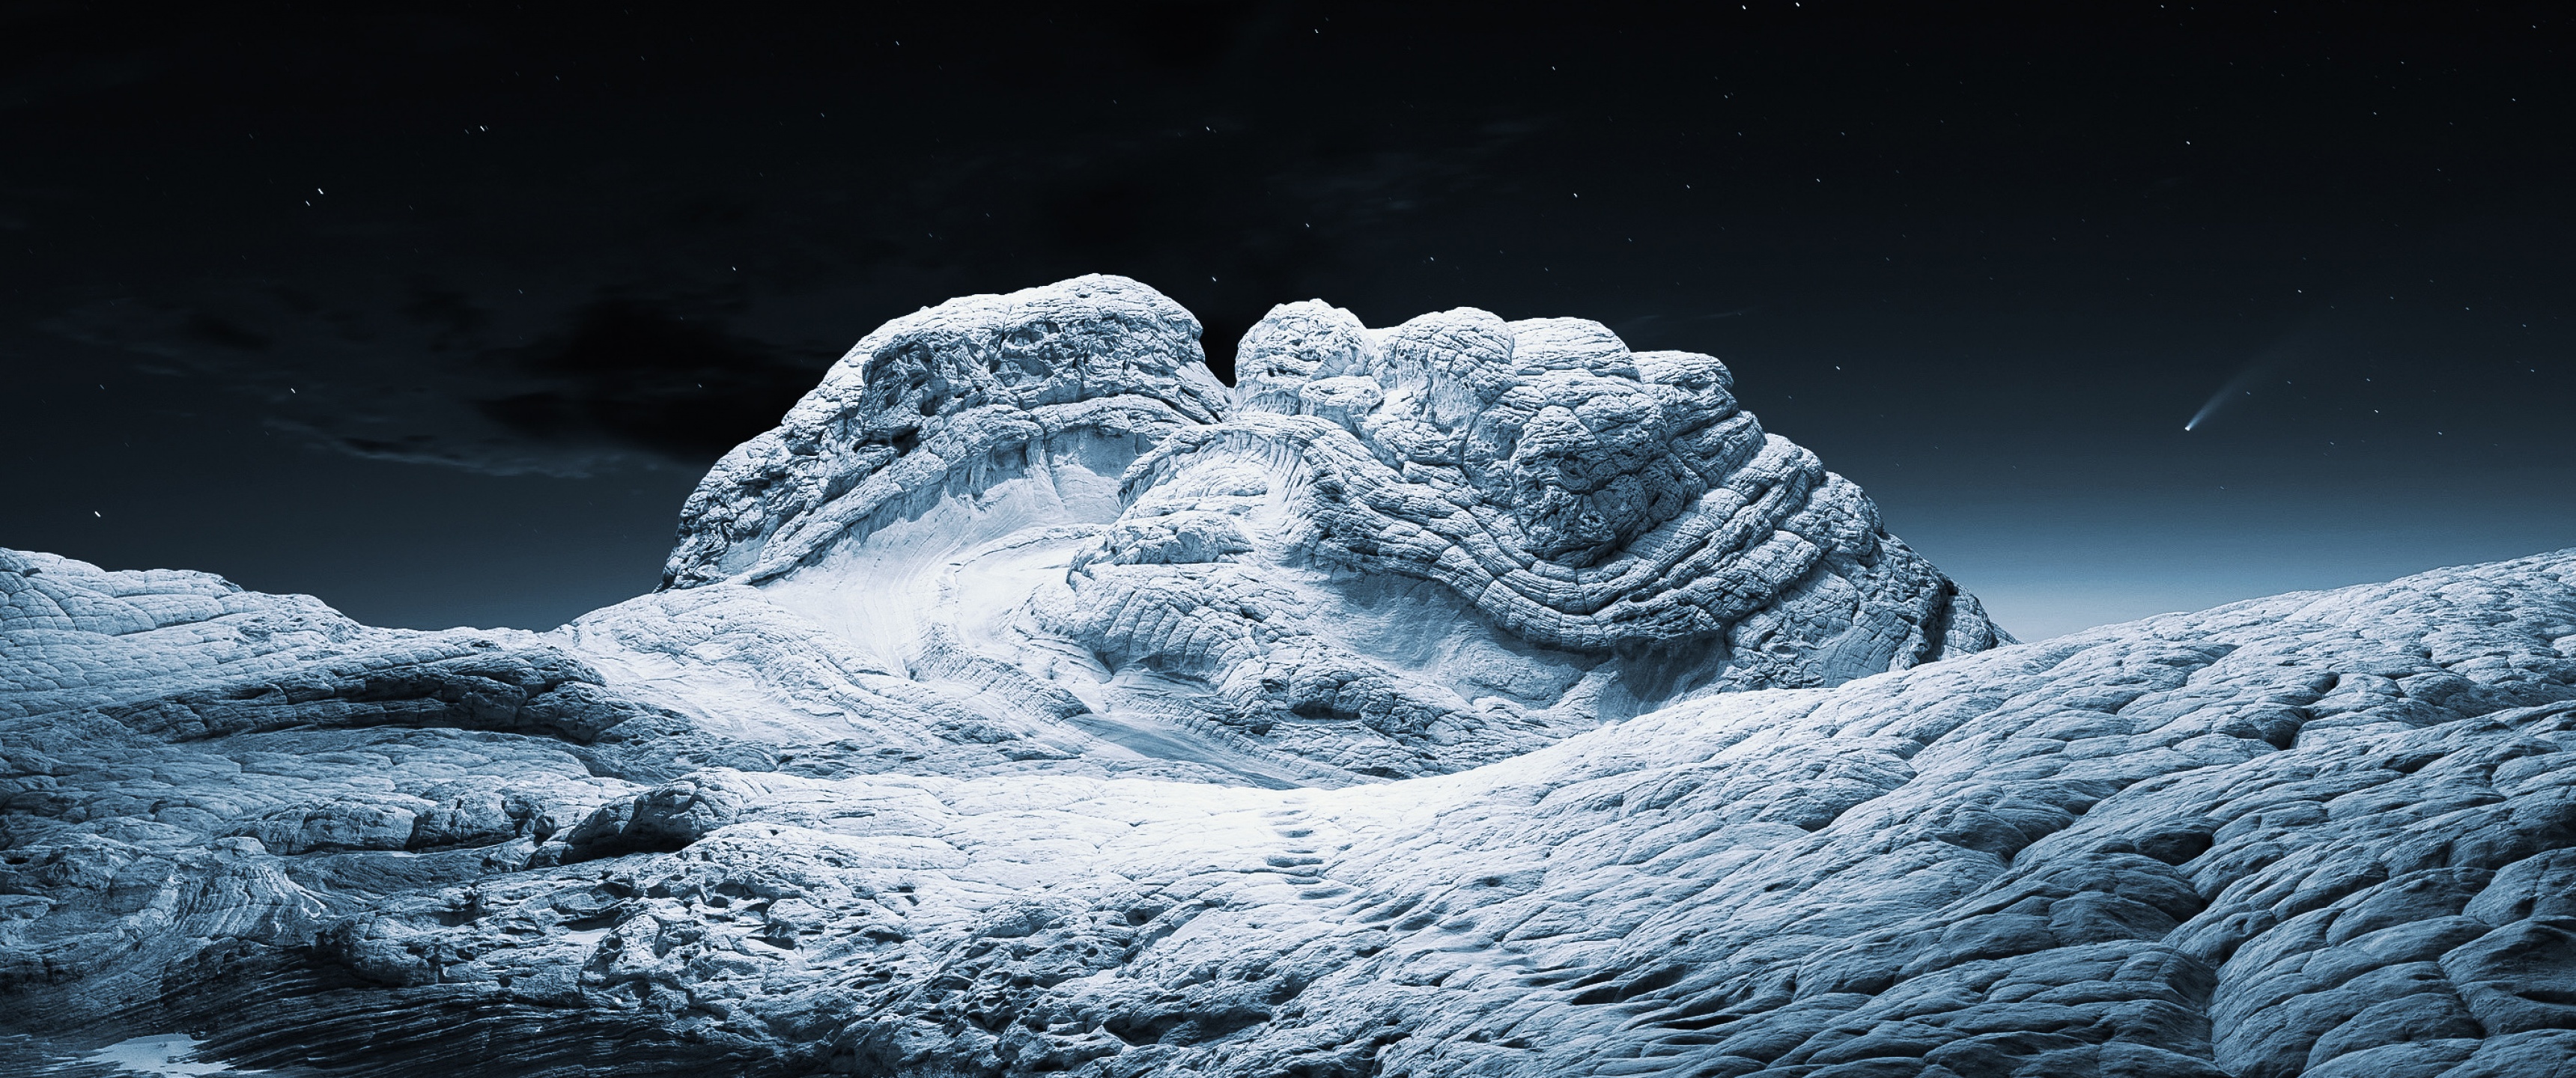 macOS Big Sur Wallpaper 4K, Stock, Cold, Winter, Sedimentary rocks, Night, Nature